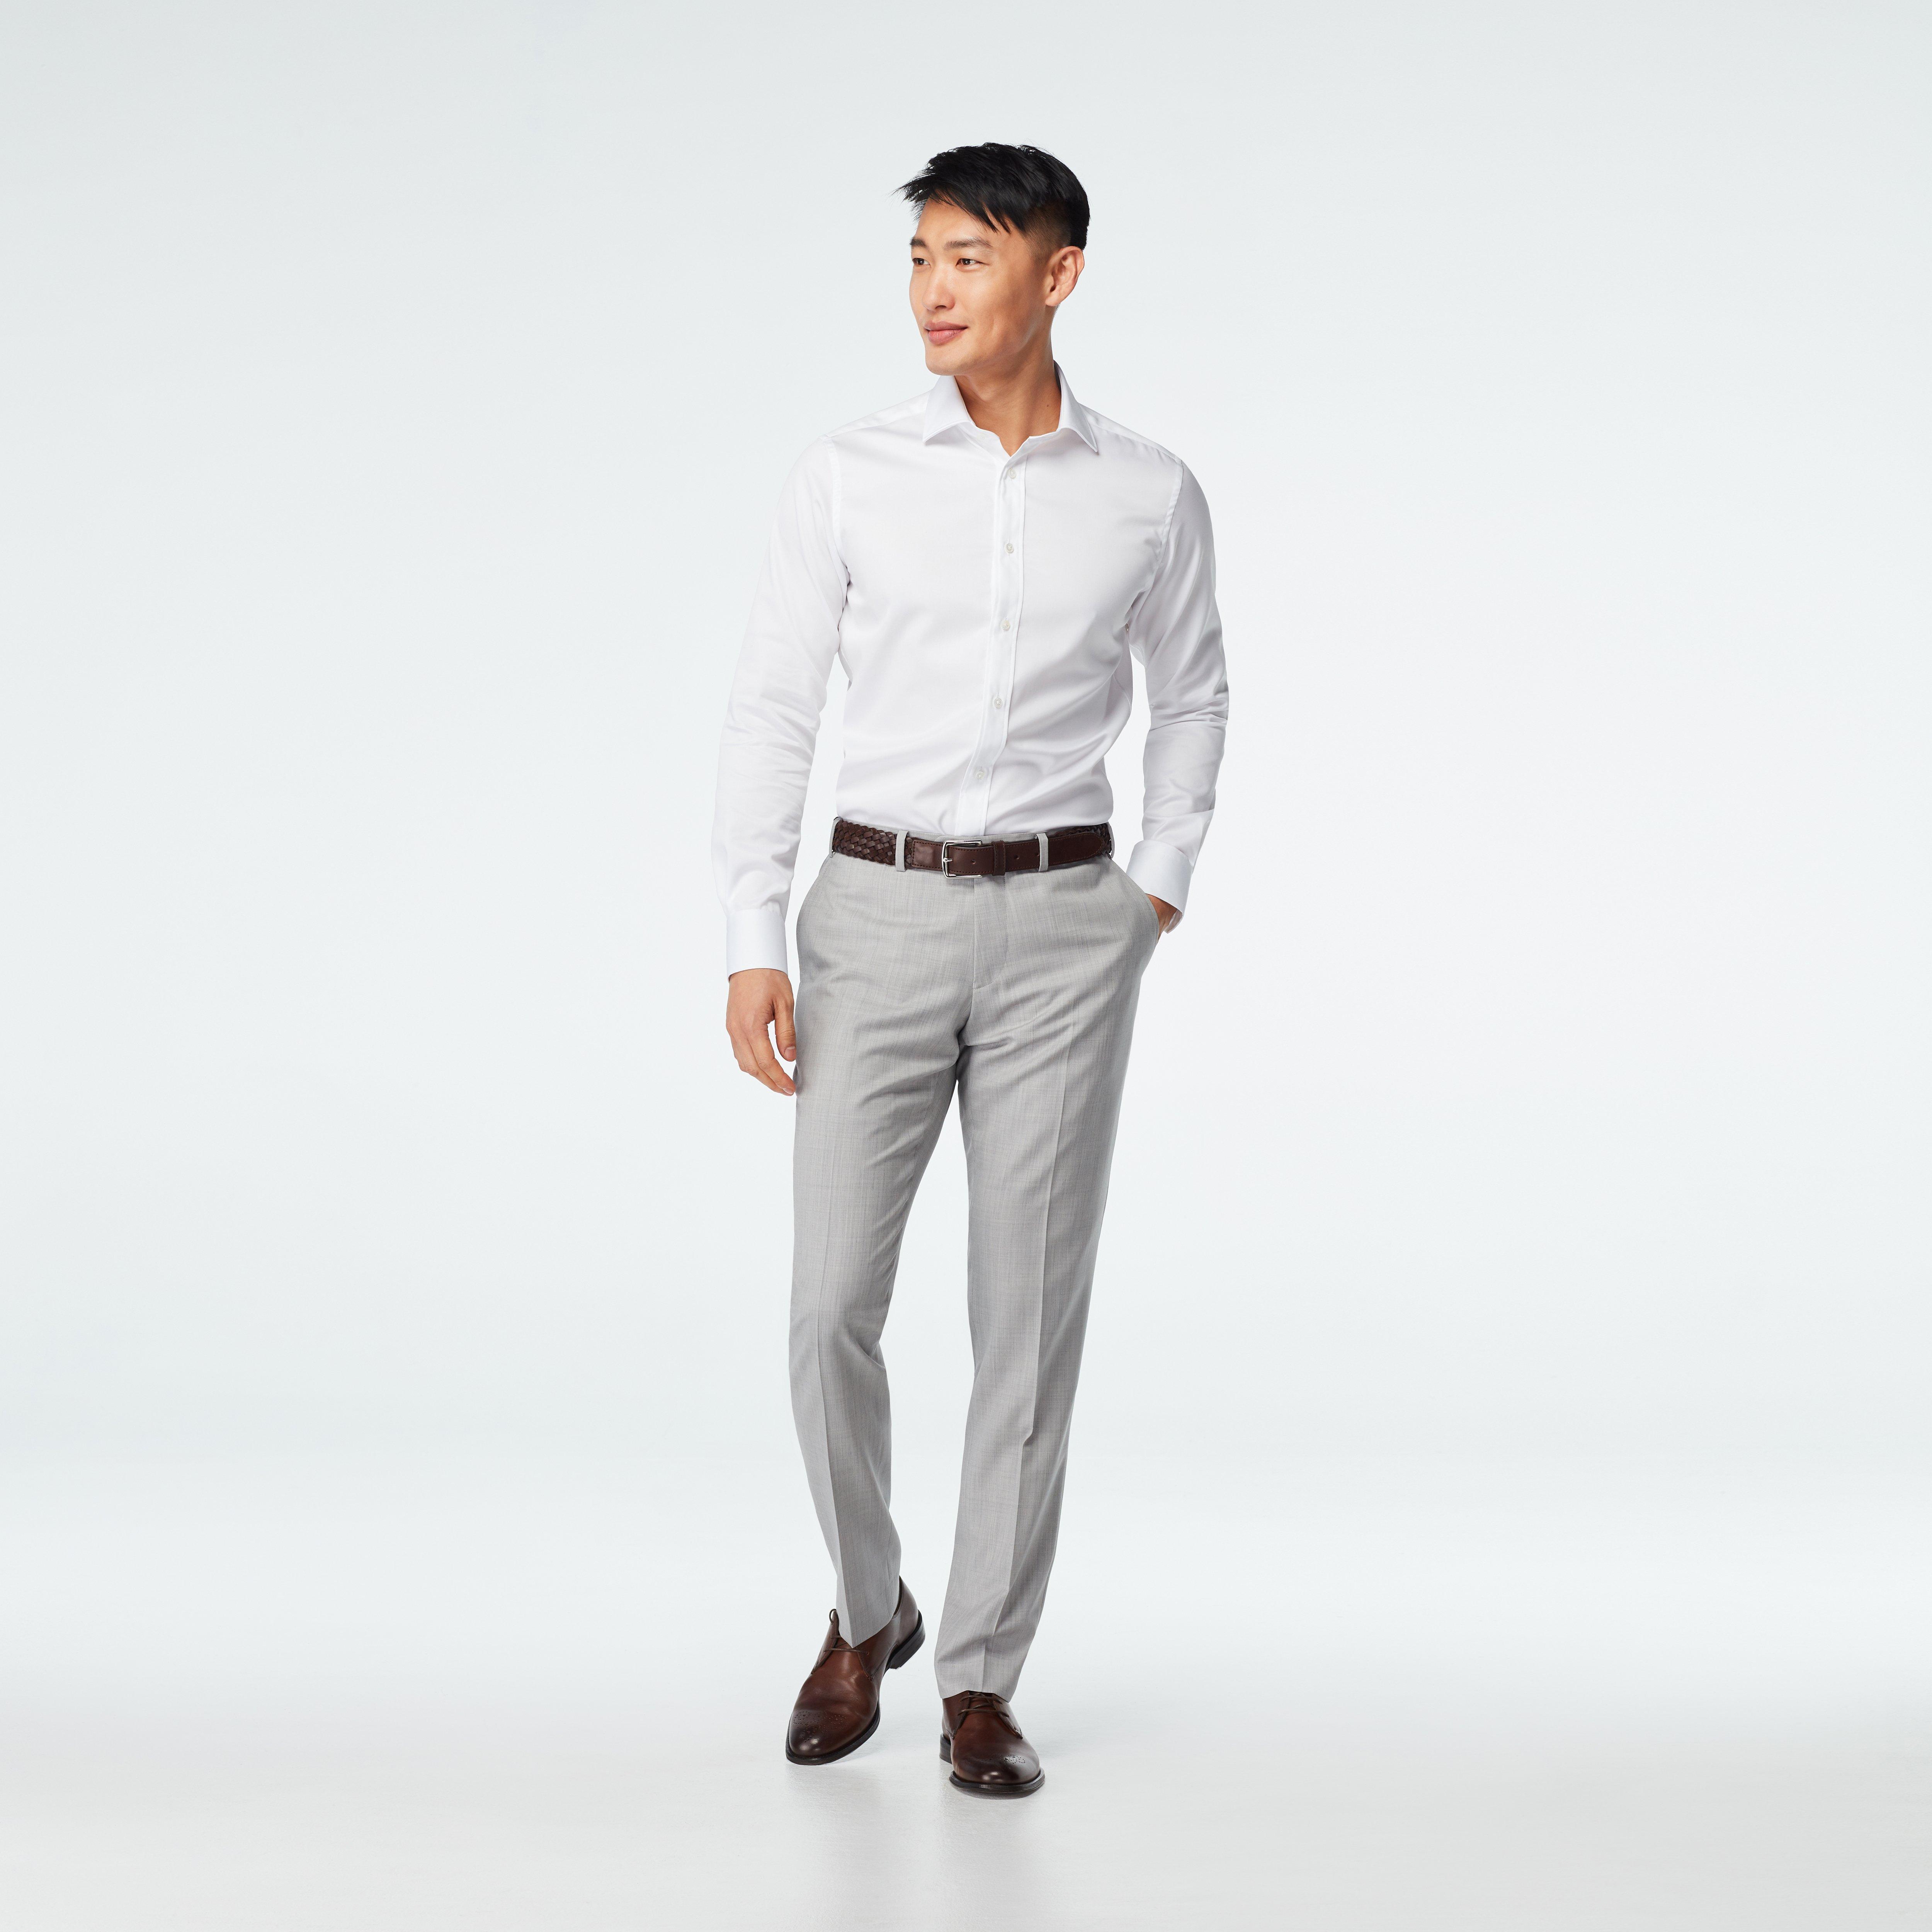 Men's Light Grey Dress Pants | Suits for Weddings & Events